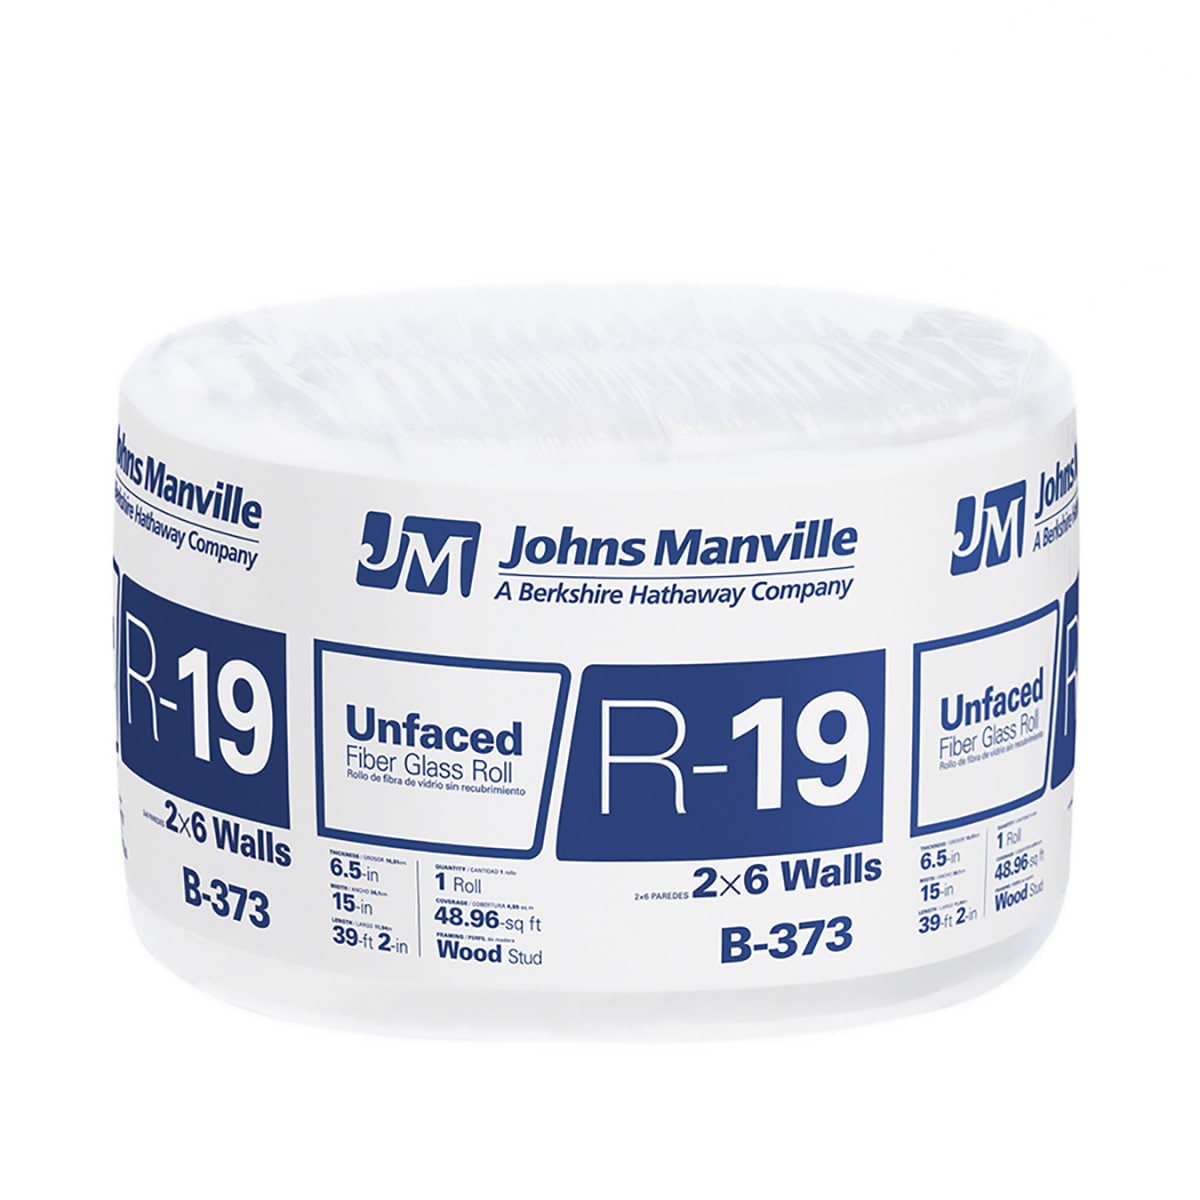 Johns Manville Micro-Lok HP High Performance Fiberglass Pipe Insulation 5  Rolls